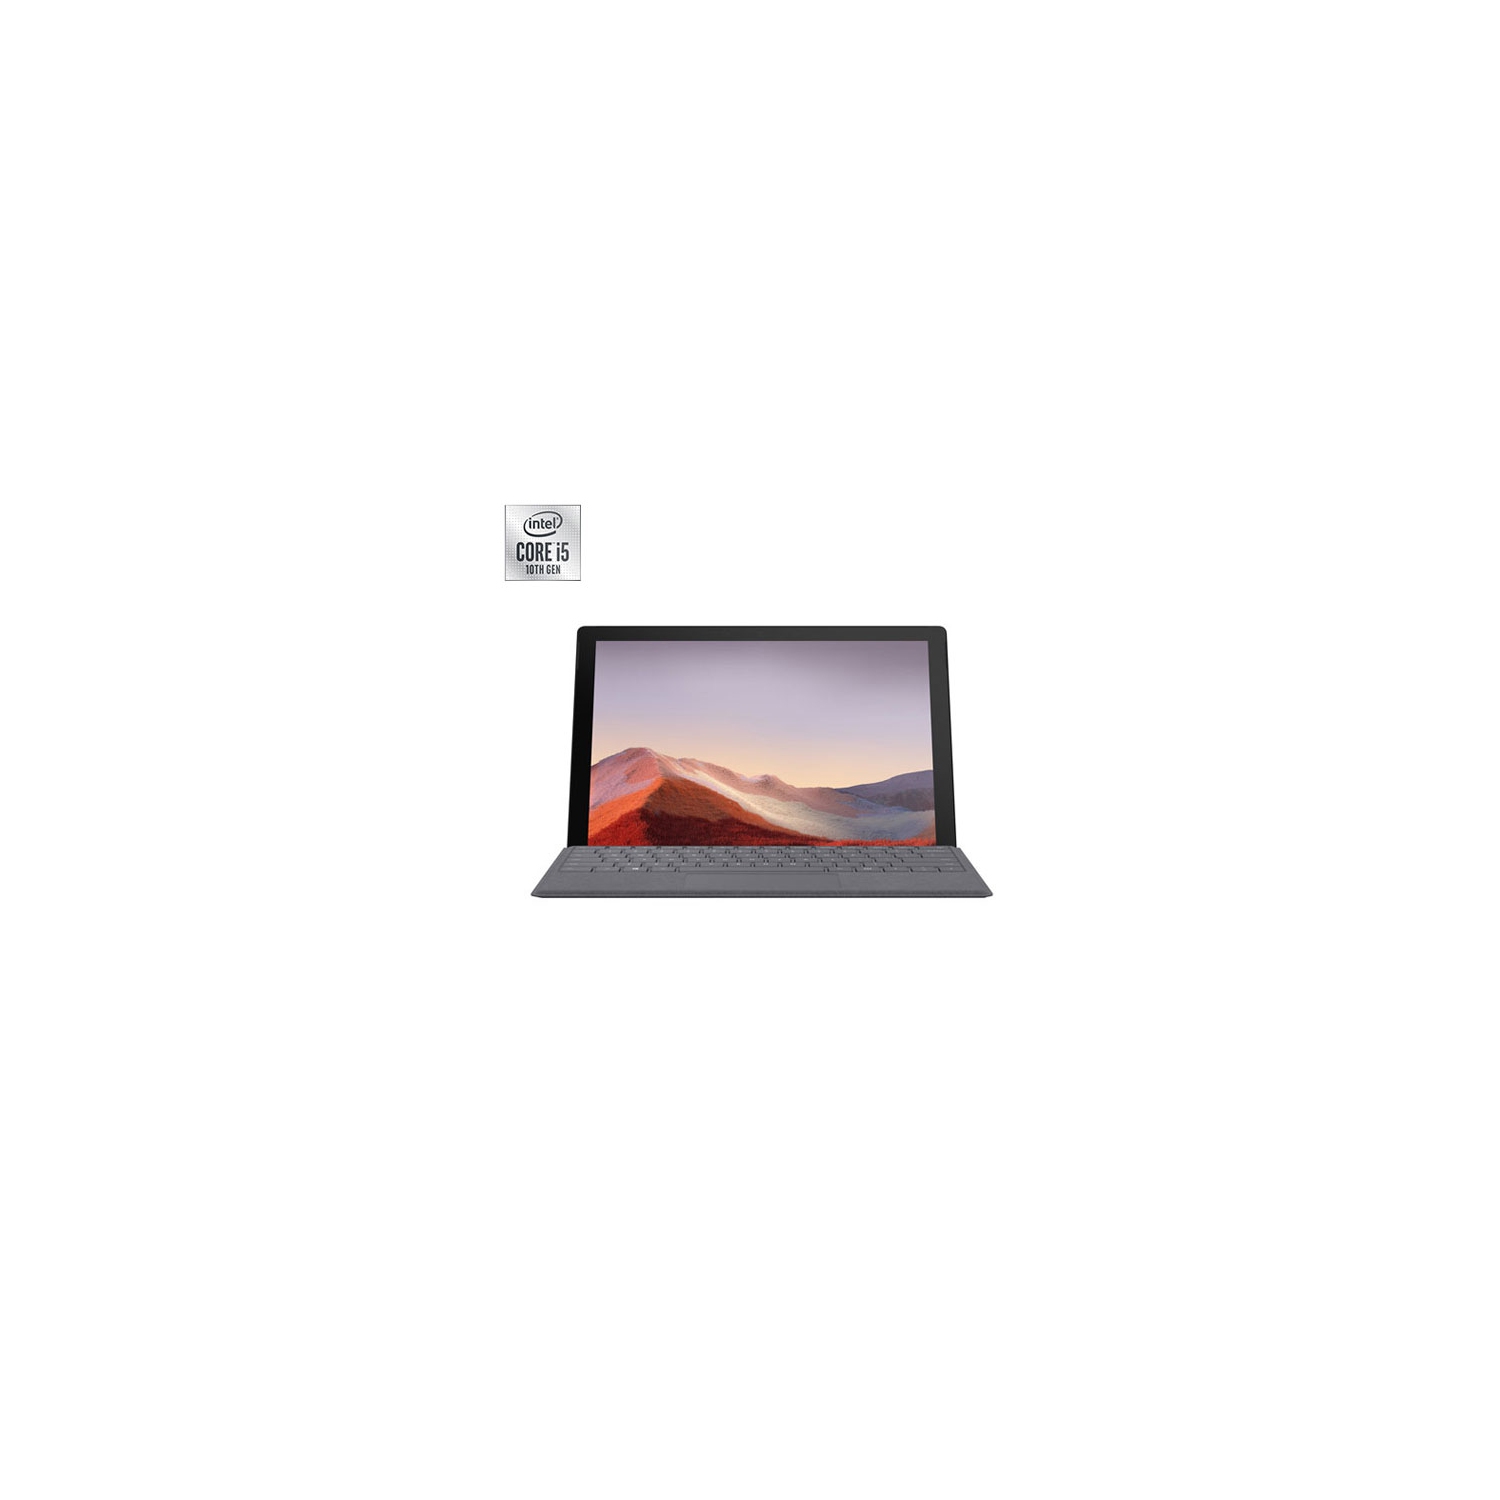 Refurbished (Good) - Microsoft Surface Pro 7 12.3" 256GB Windows 10 Tablet With 10th Gen Intel Core i5/8GB RAM - Black